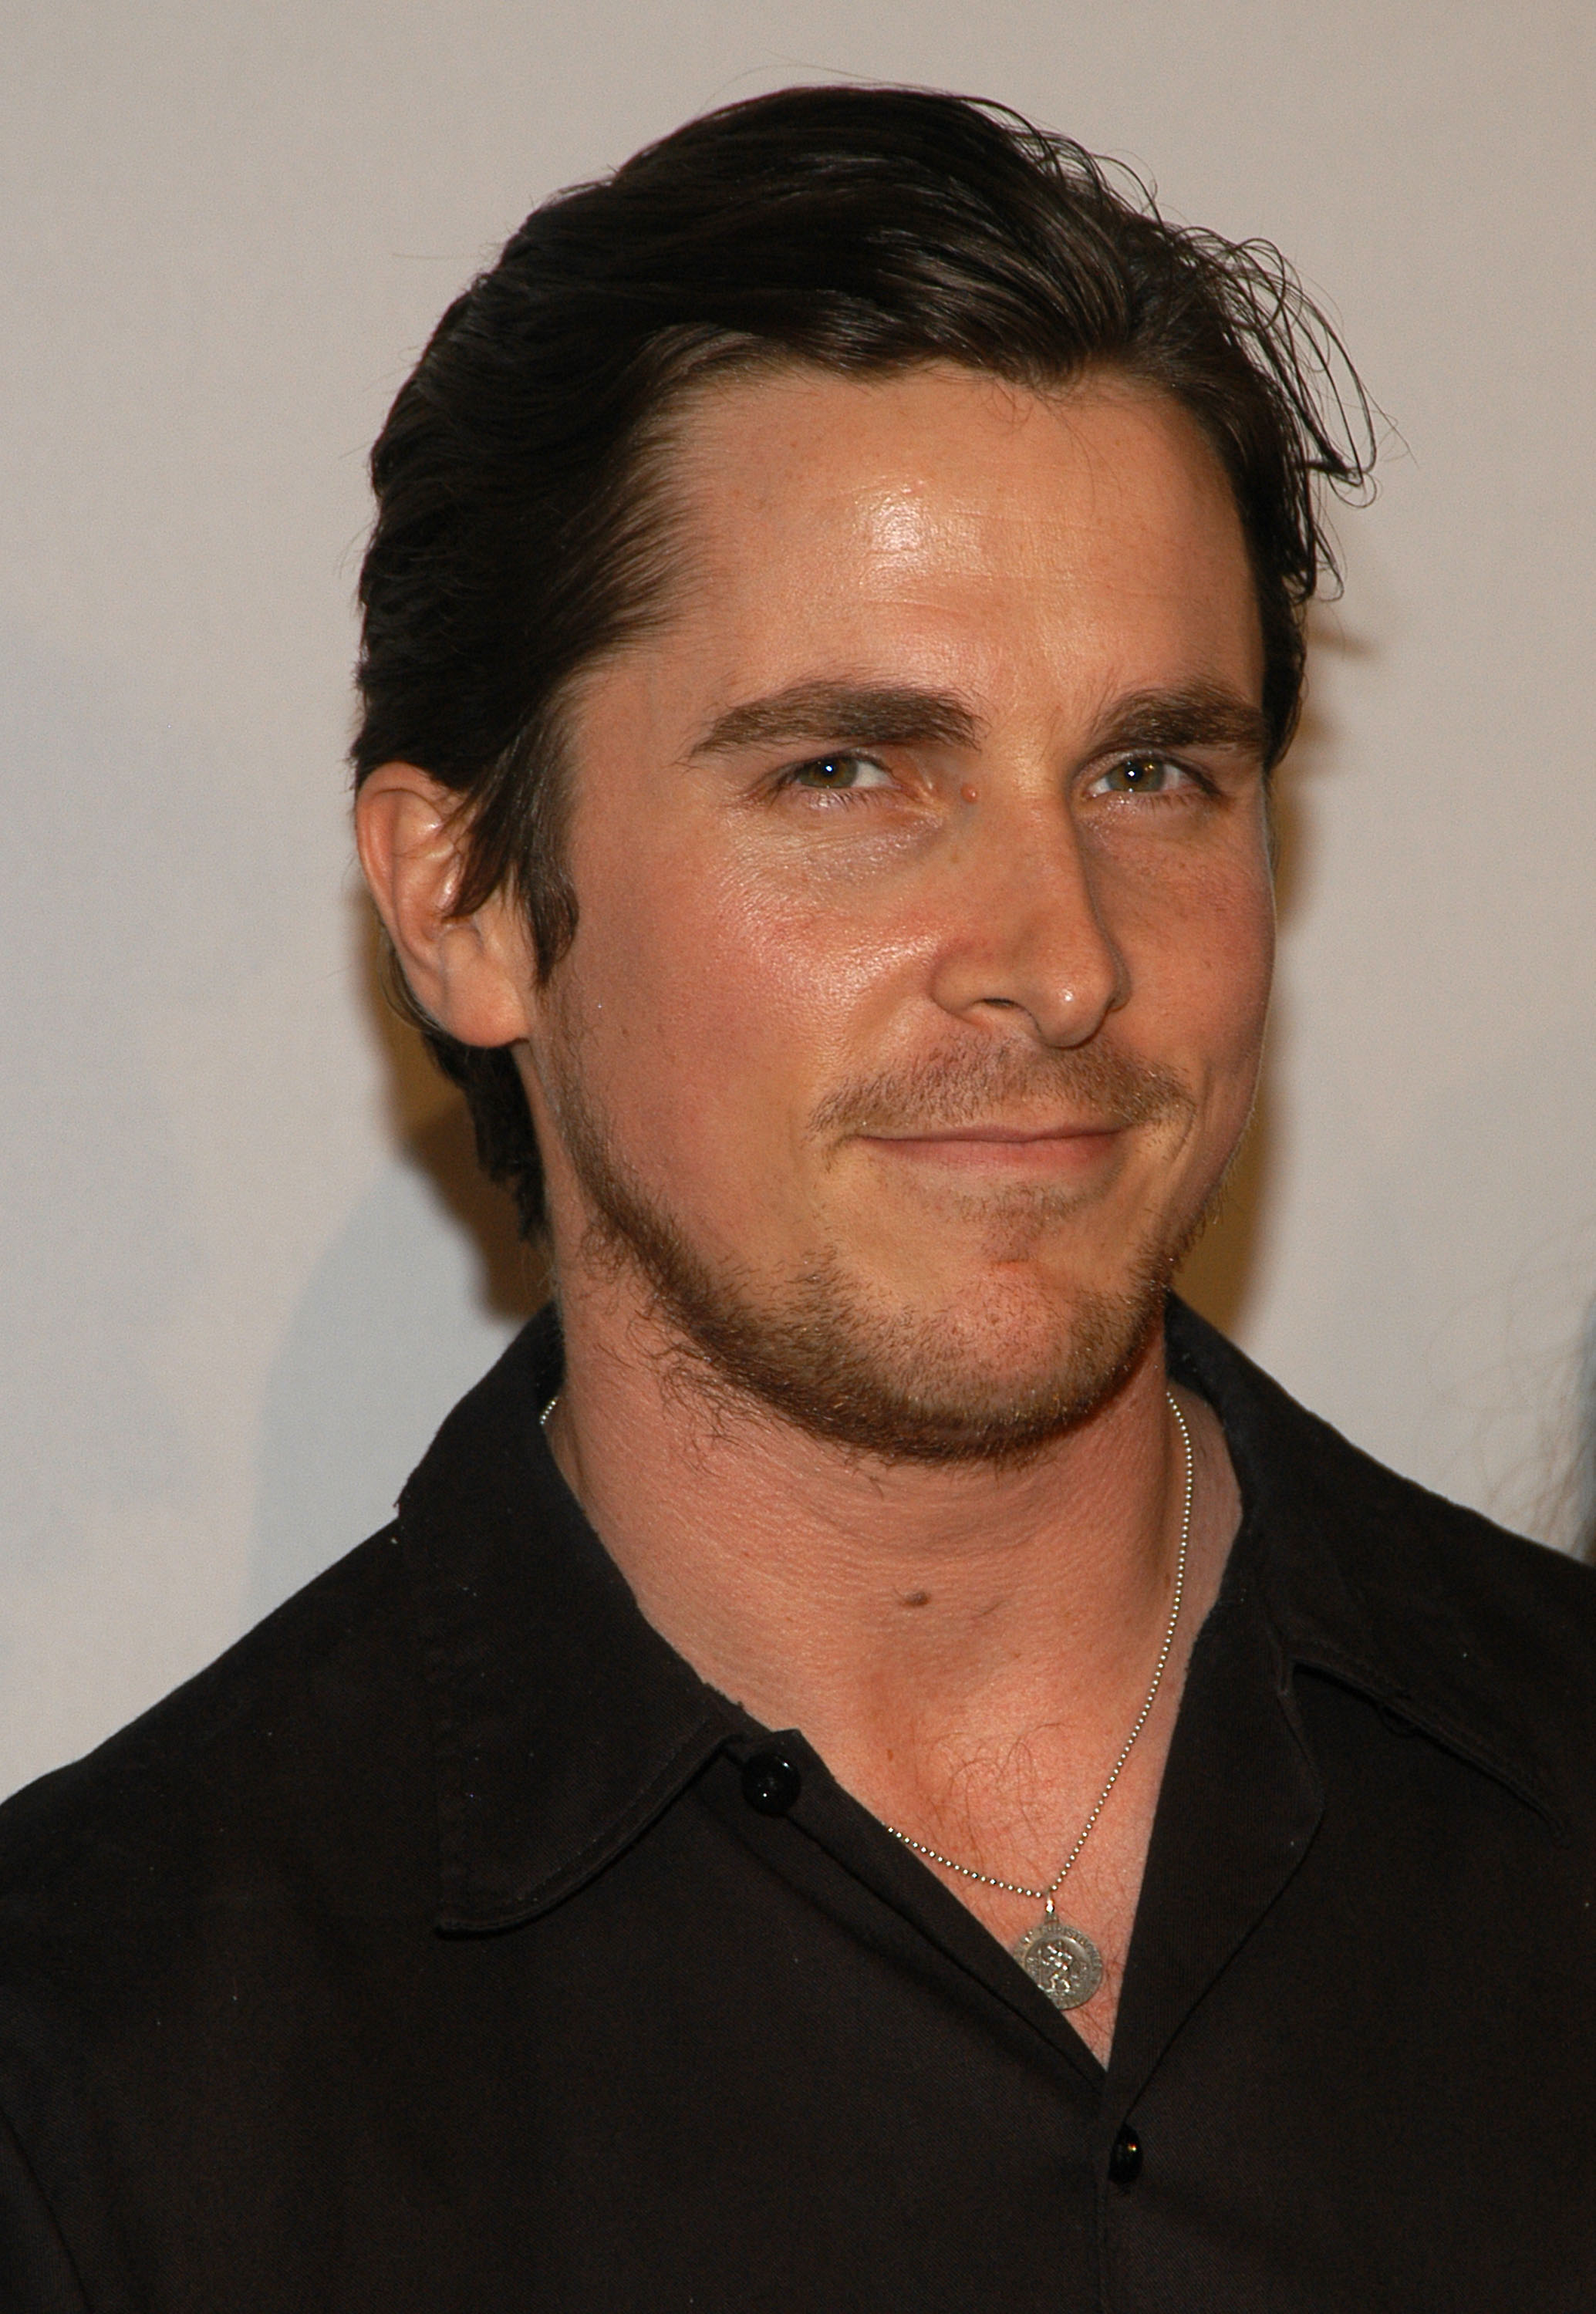 Christian Bale Backgrounds, Compatible - PC, Mobile, Gadgets| 2069x3000 px